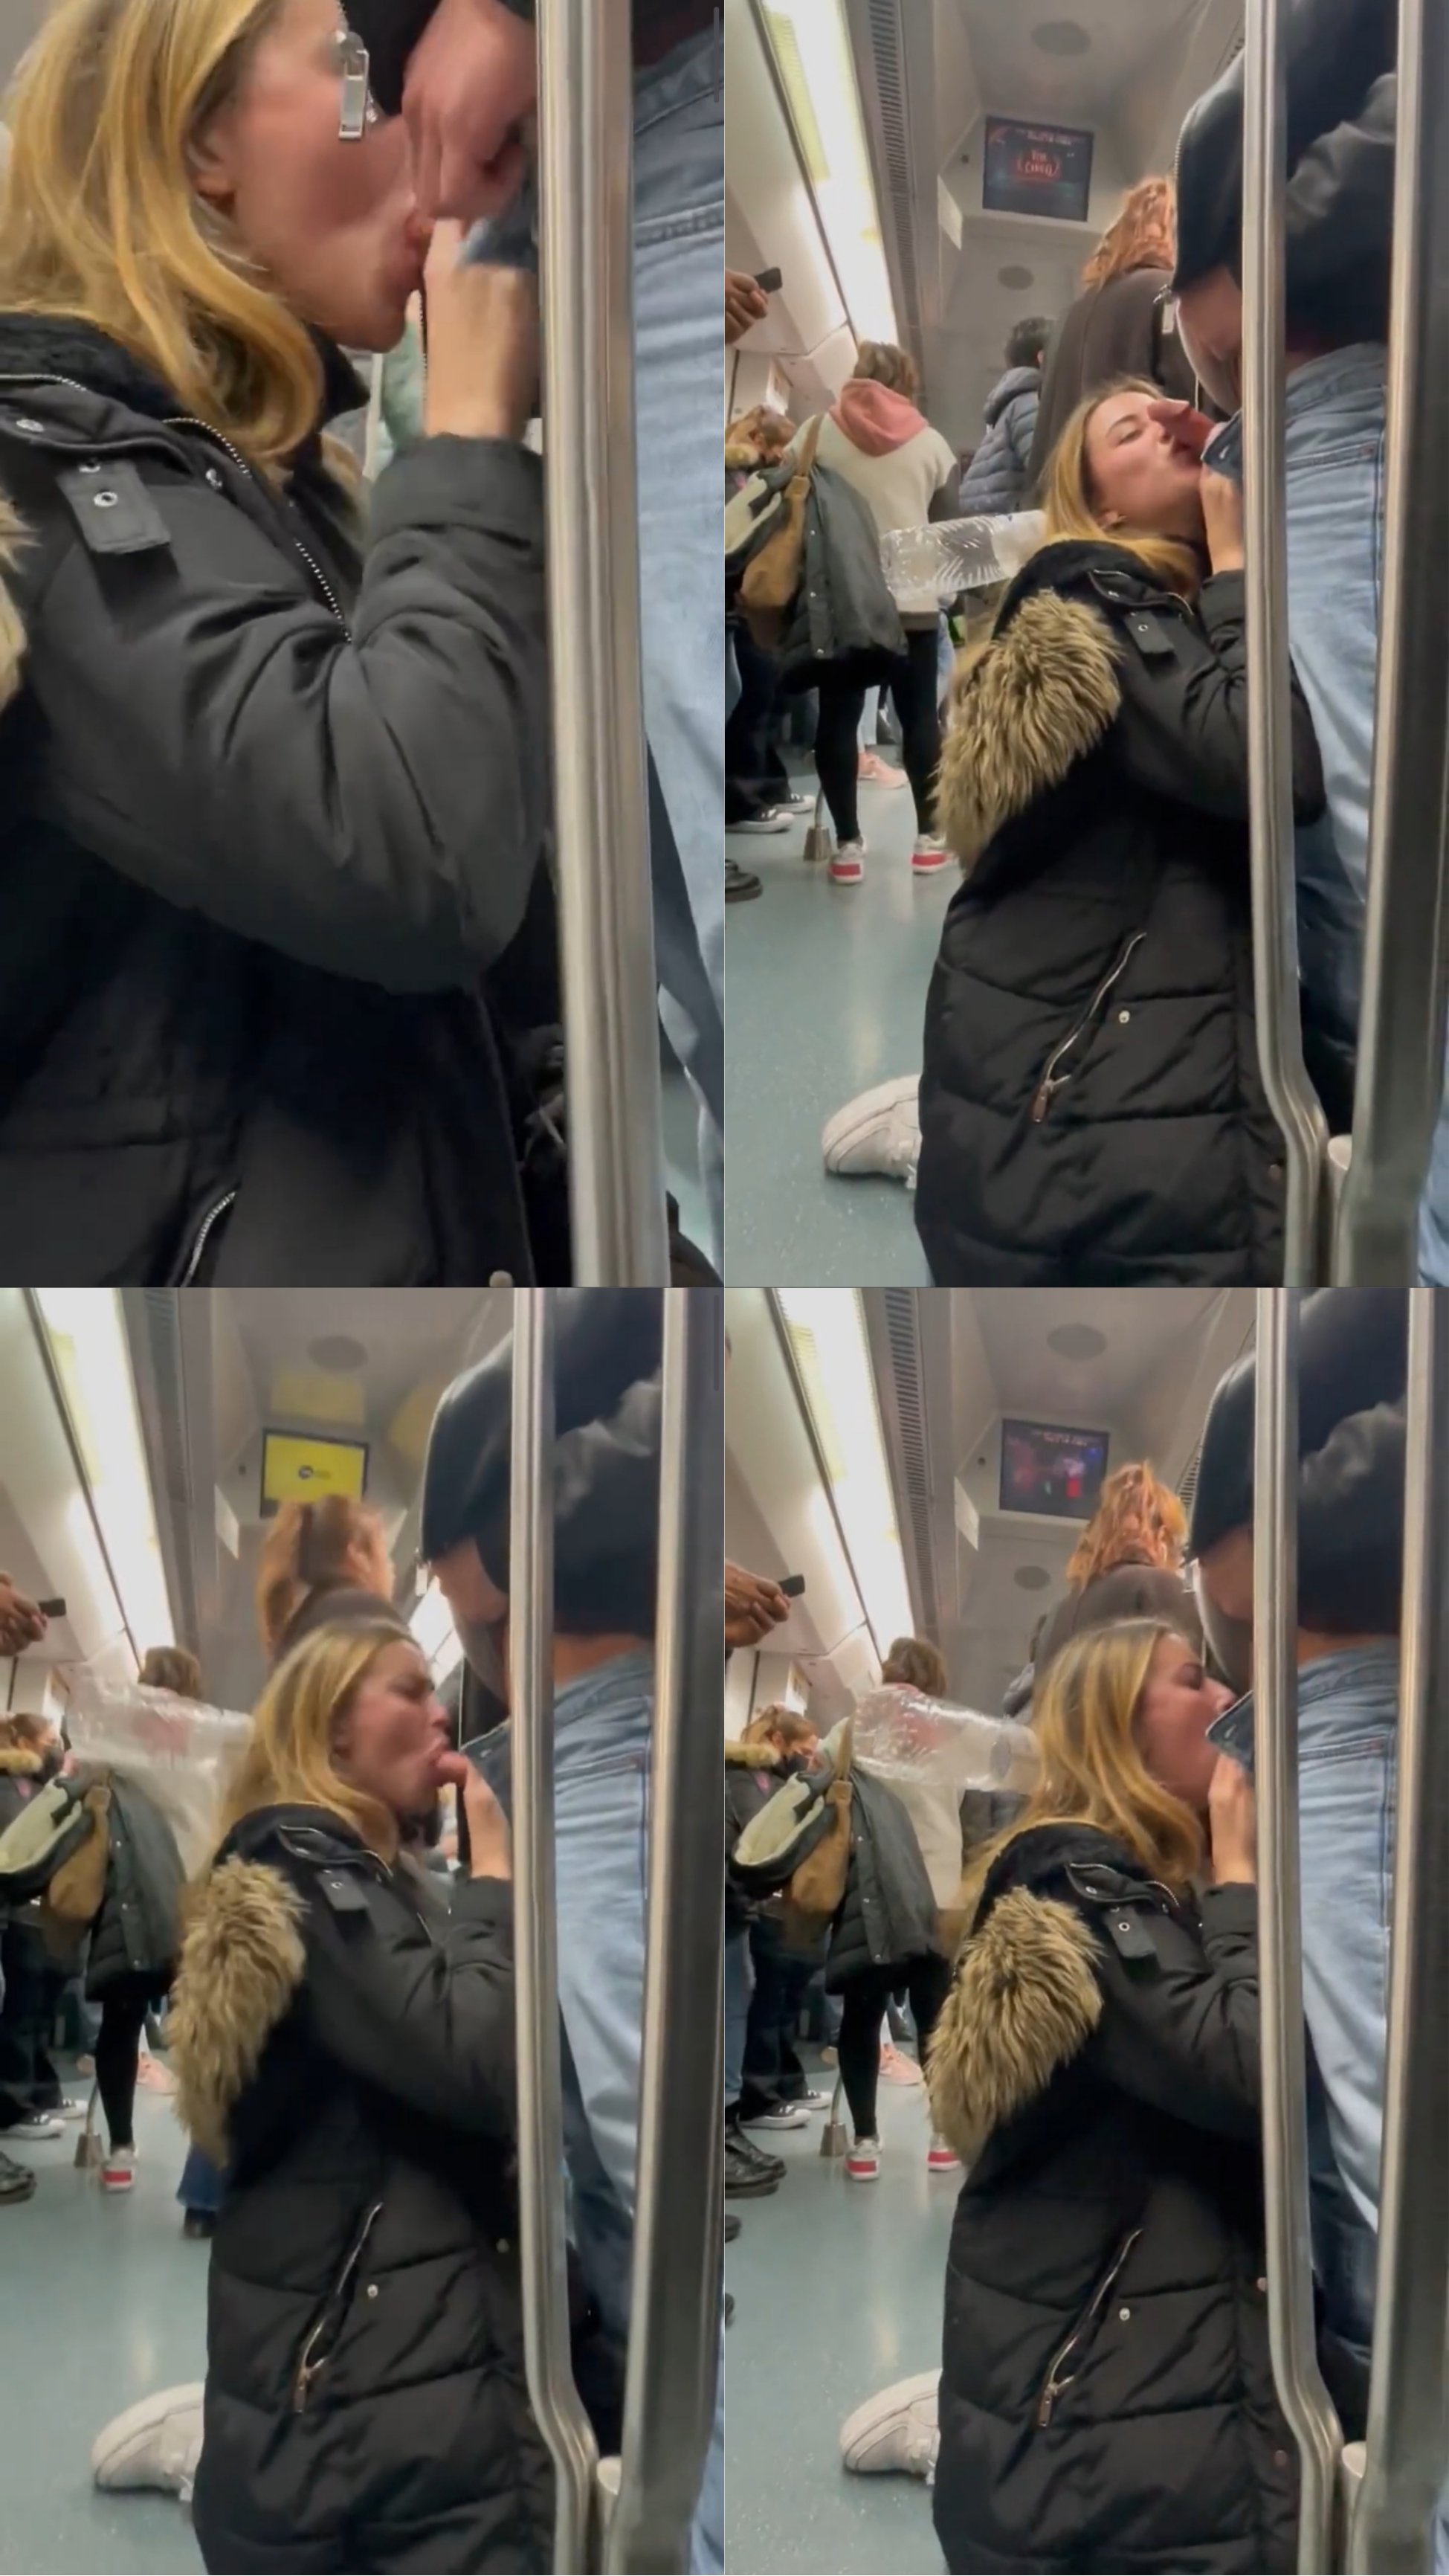 cindy charlie add horny girl on train photo